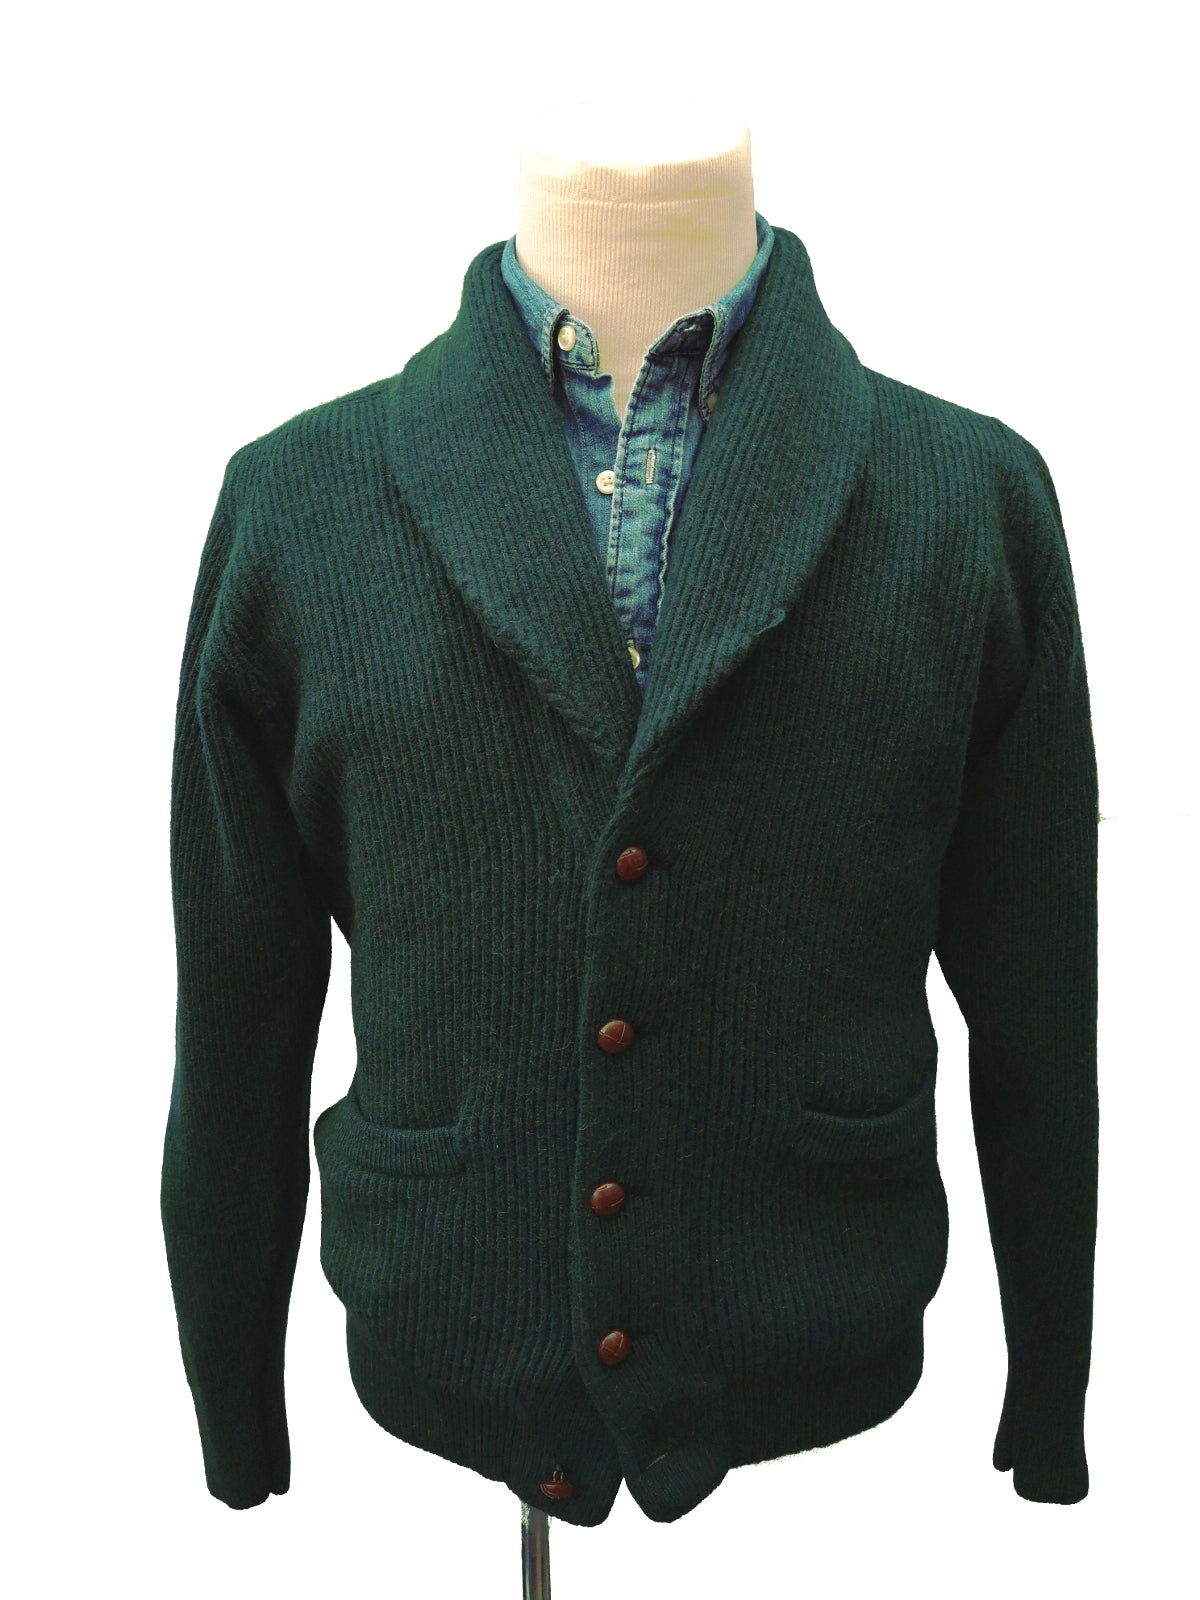 the-wardrobe-shawl-collar-cardigan-camel-hair-bottle-green-4_1200x1600.jpg